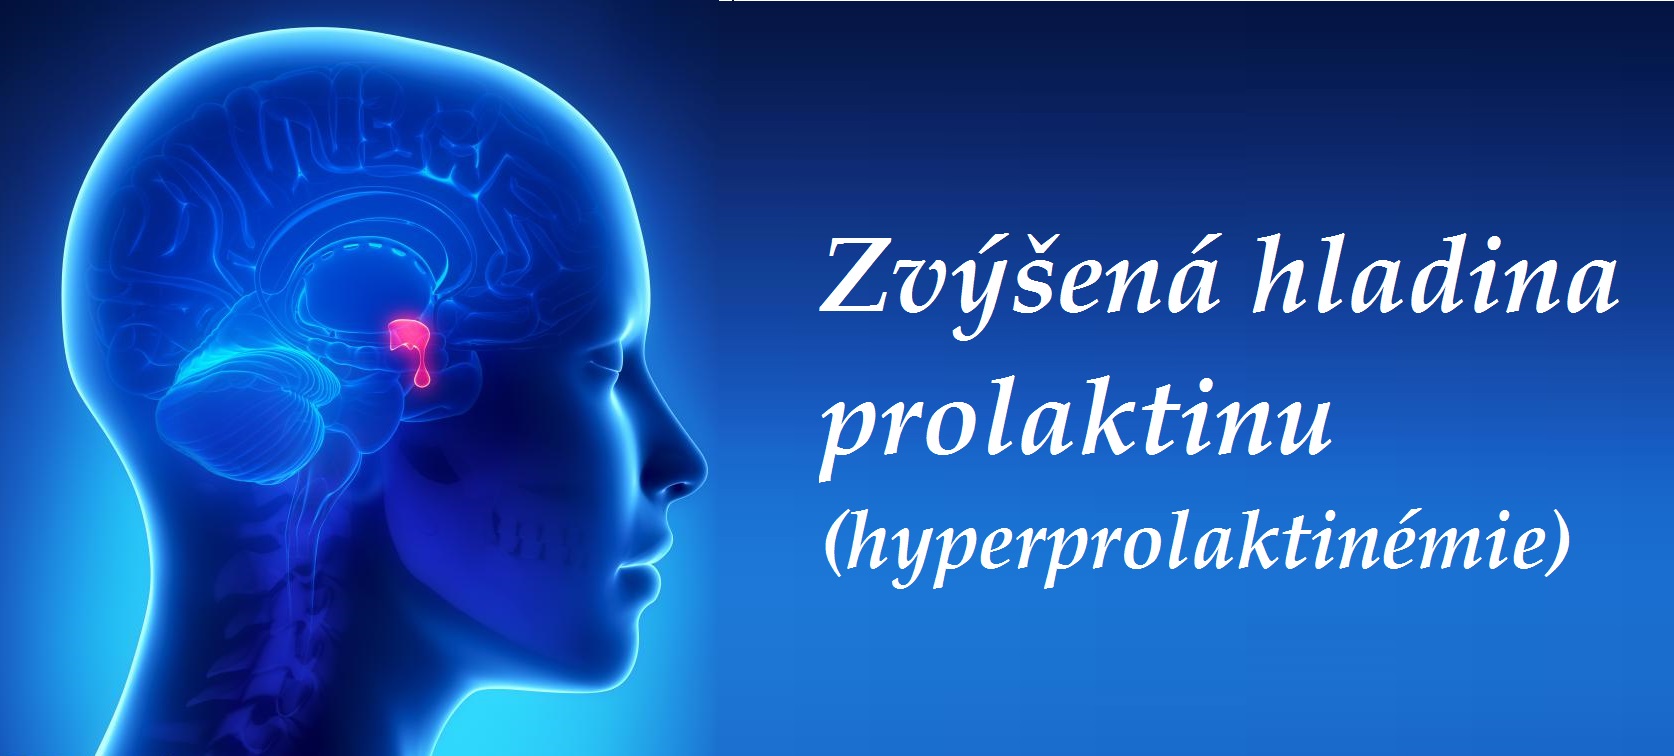 zvysena hladina prolaktinu hyperprolaktinemie priznaky projevy